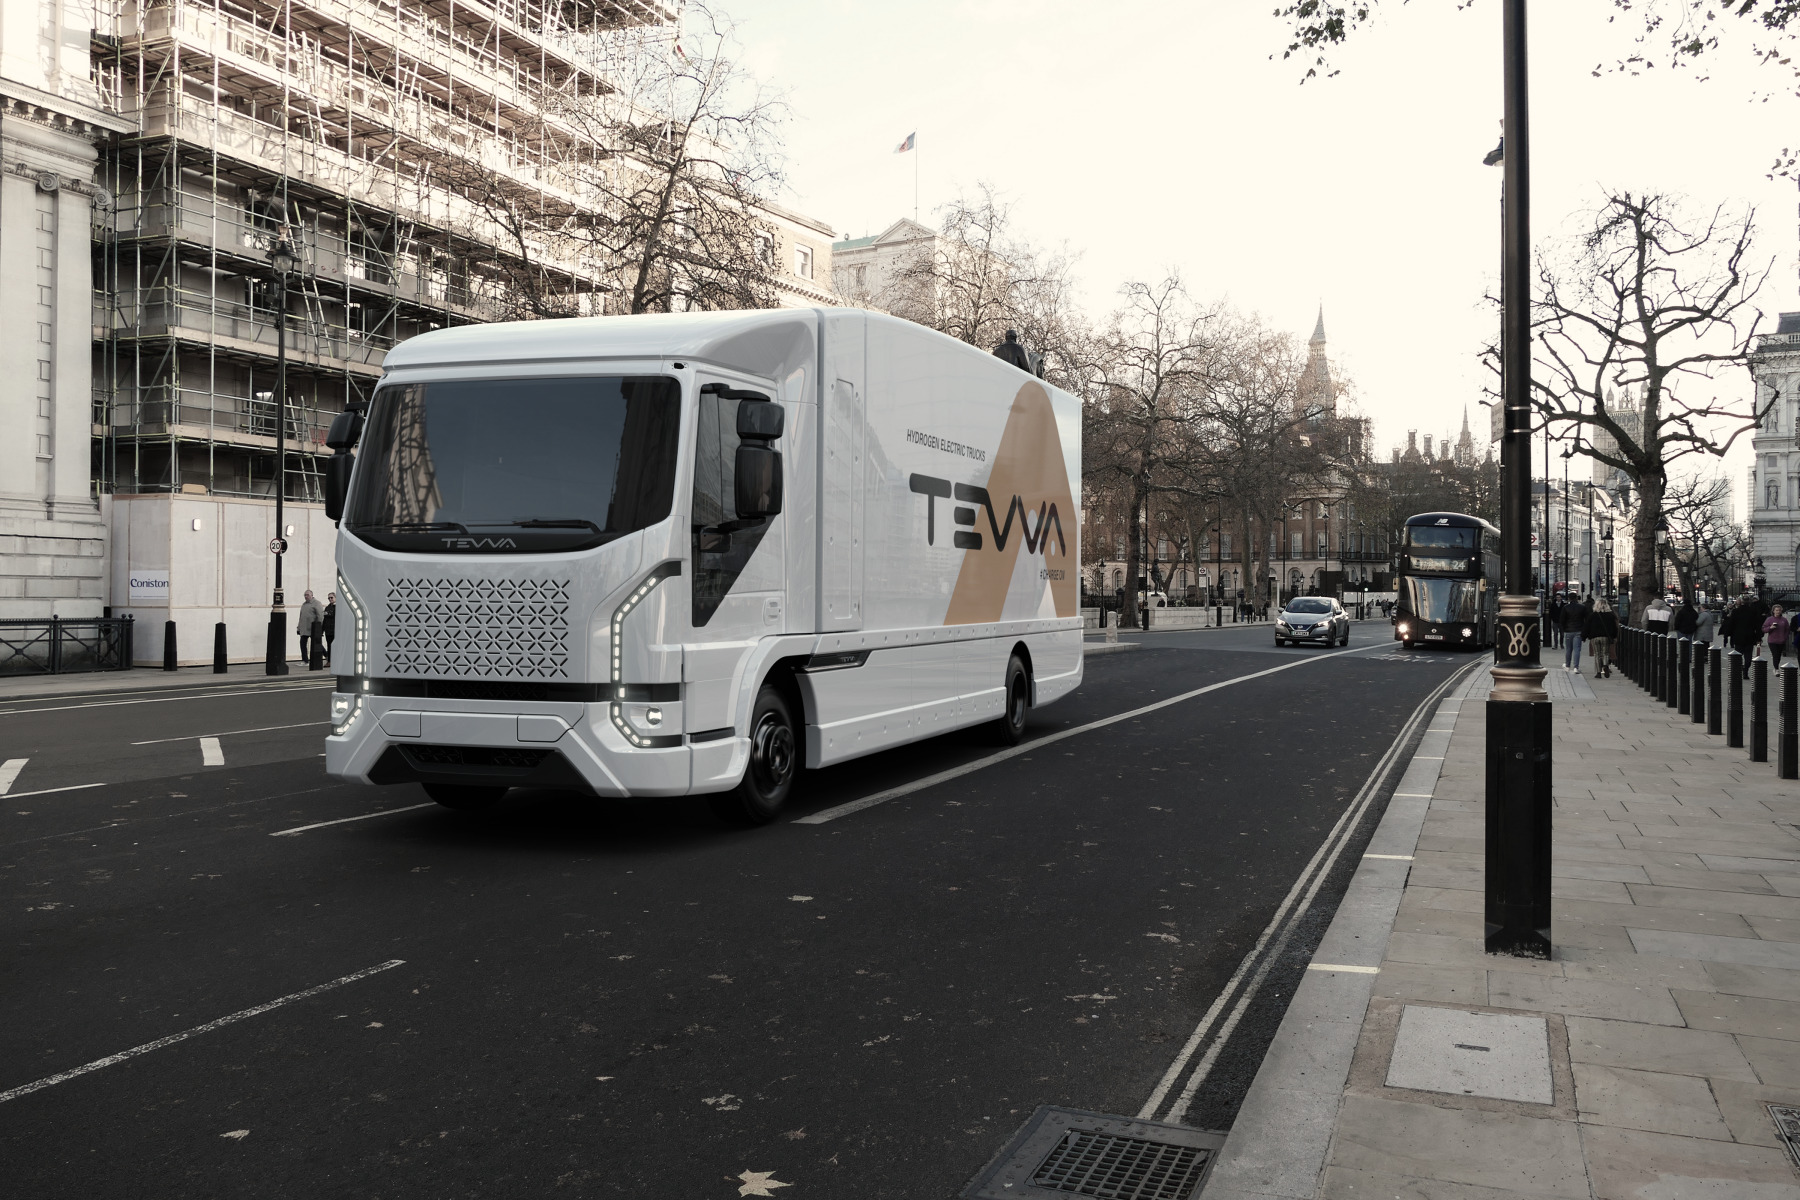 Tevva 7.5t electric truck in London